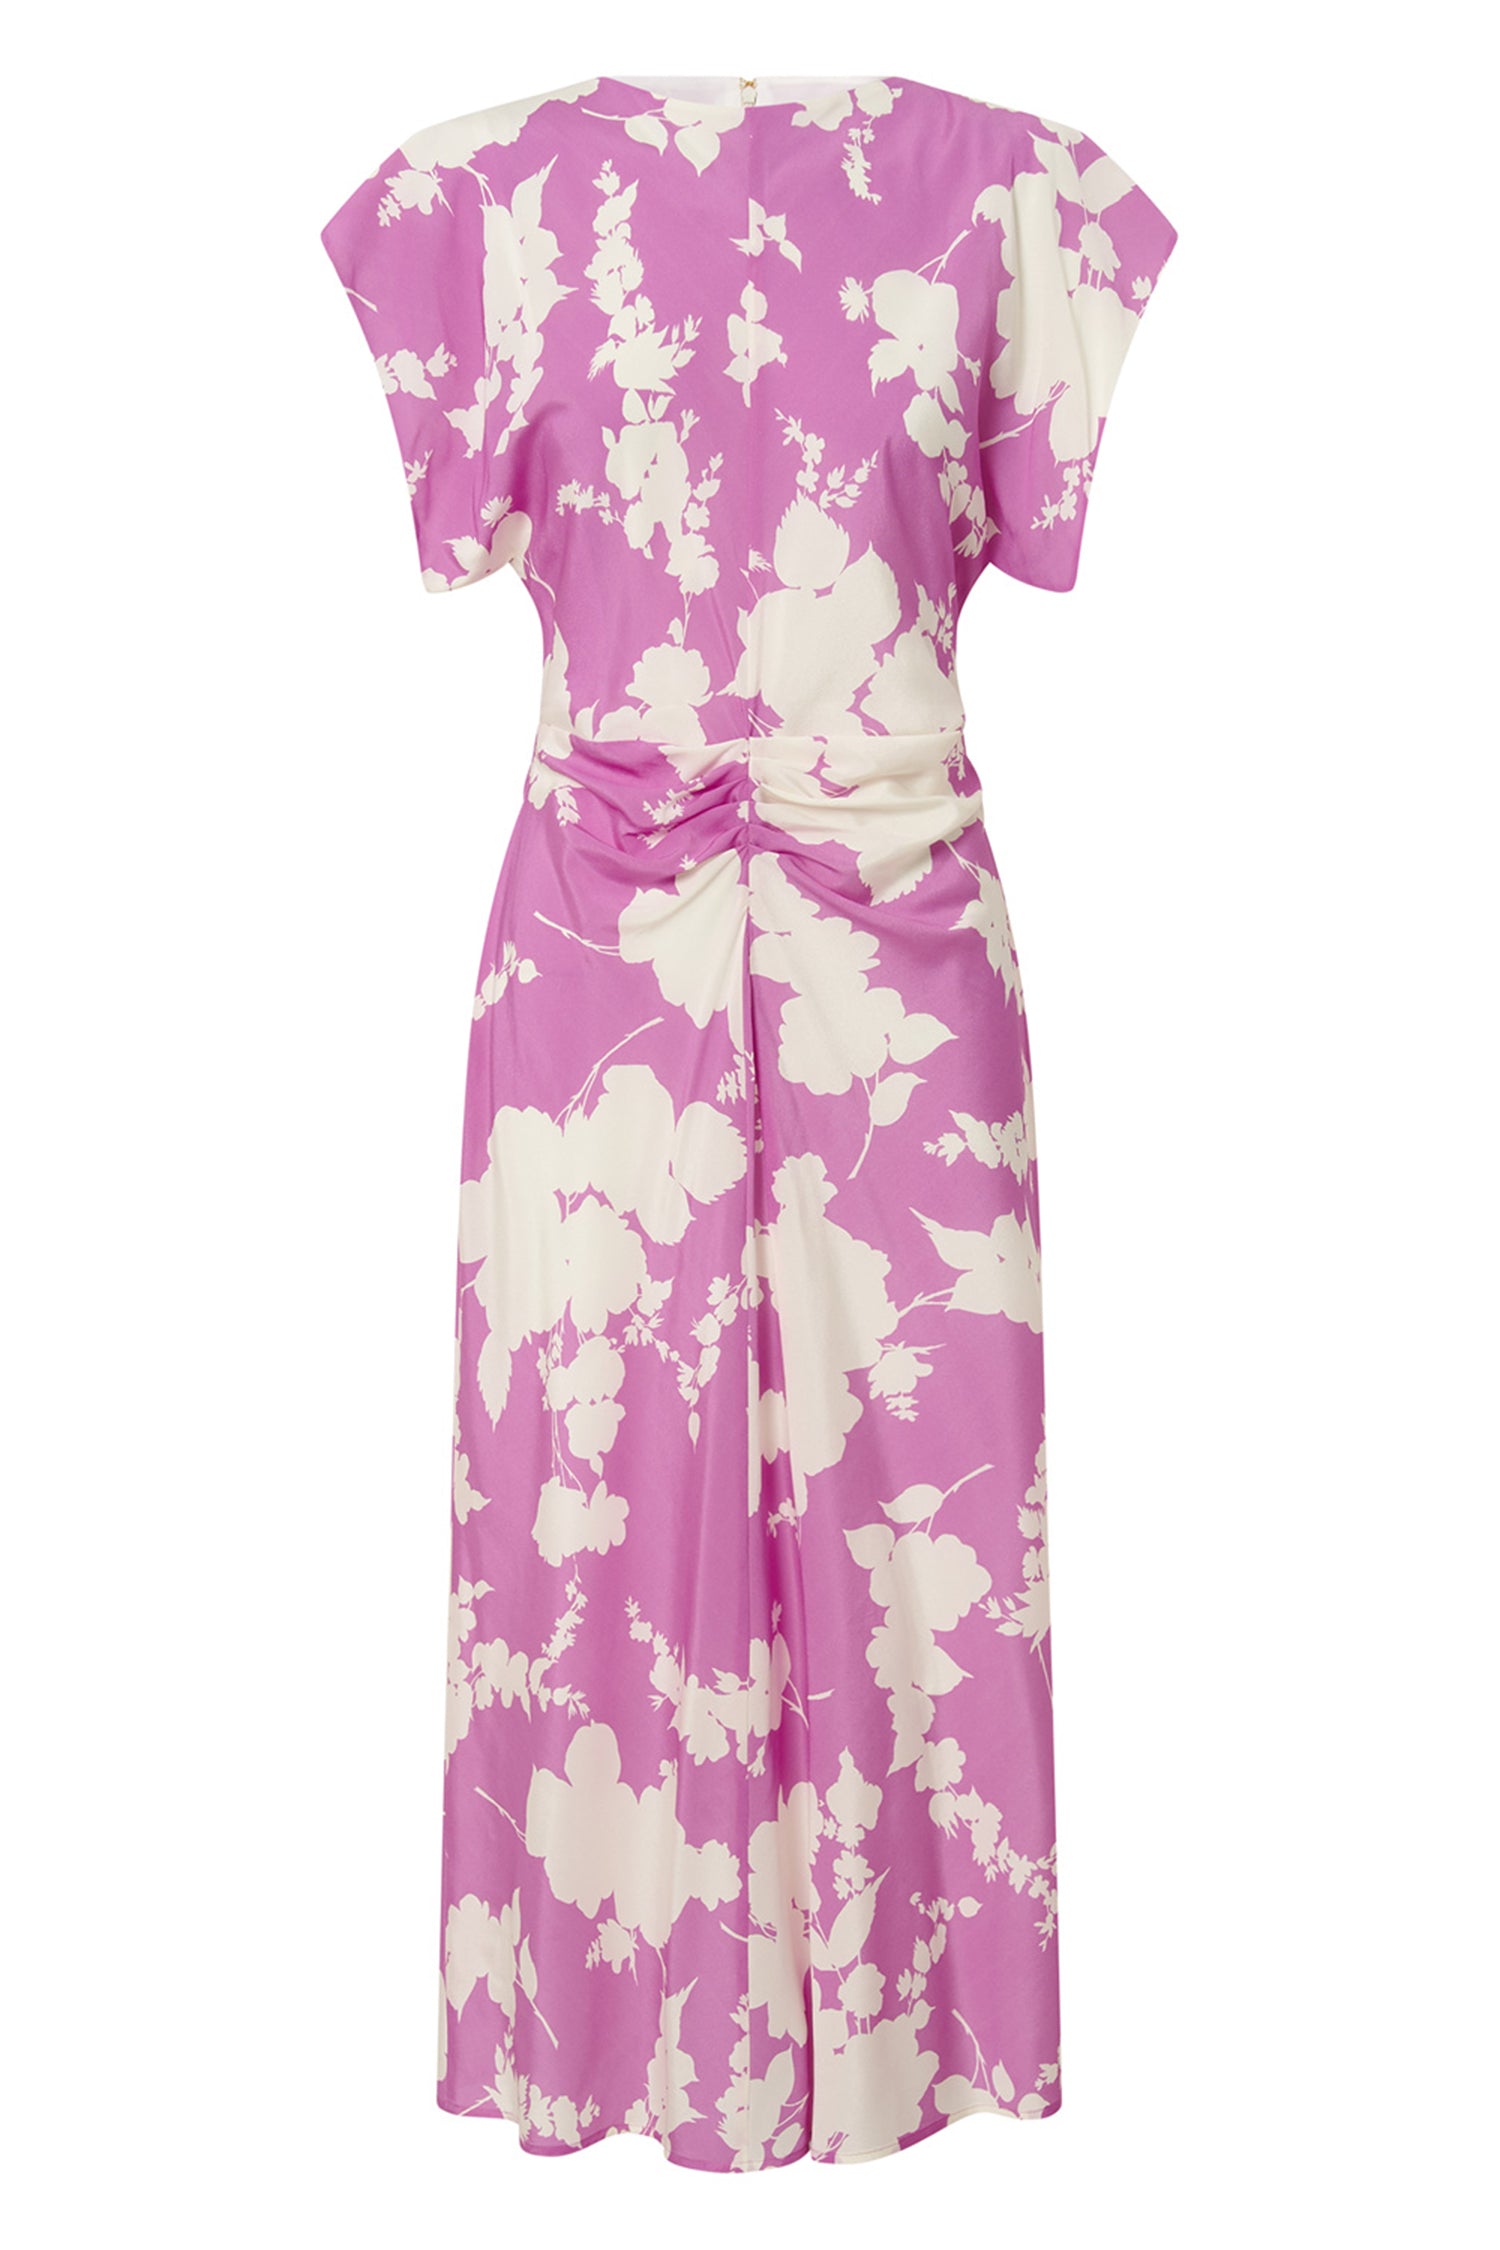 Oroton-Silhouette Print Silk Dress-Justbrazil